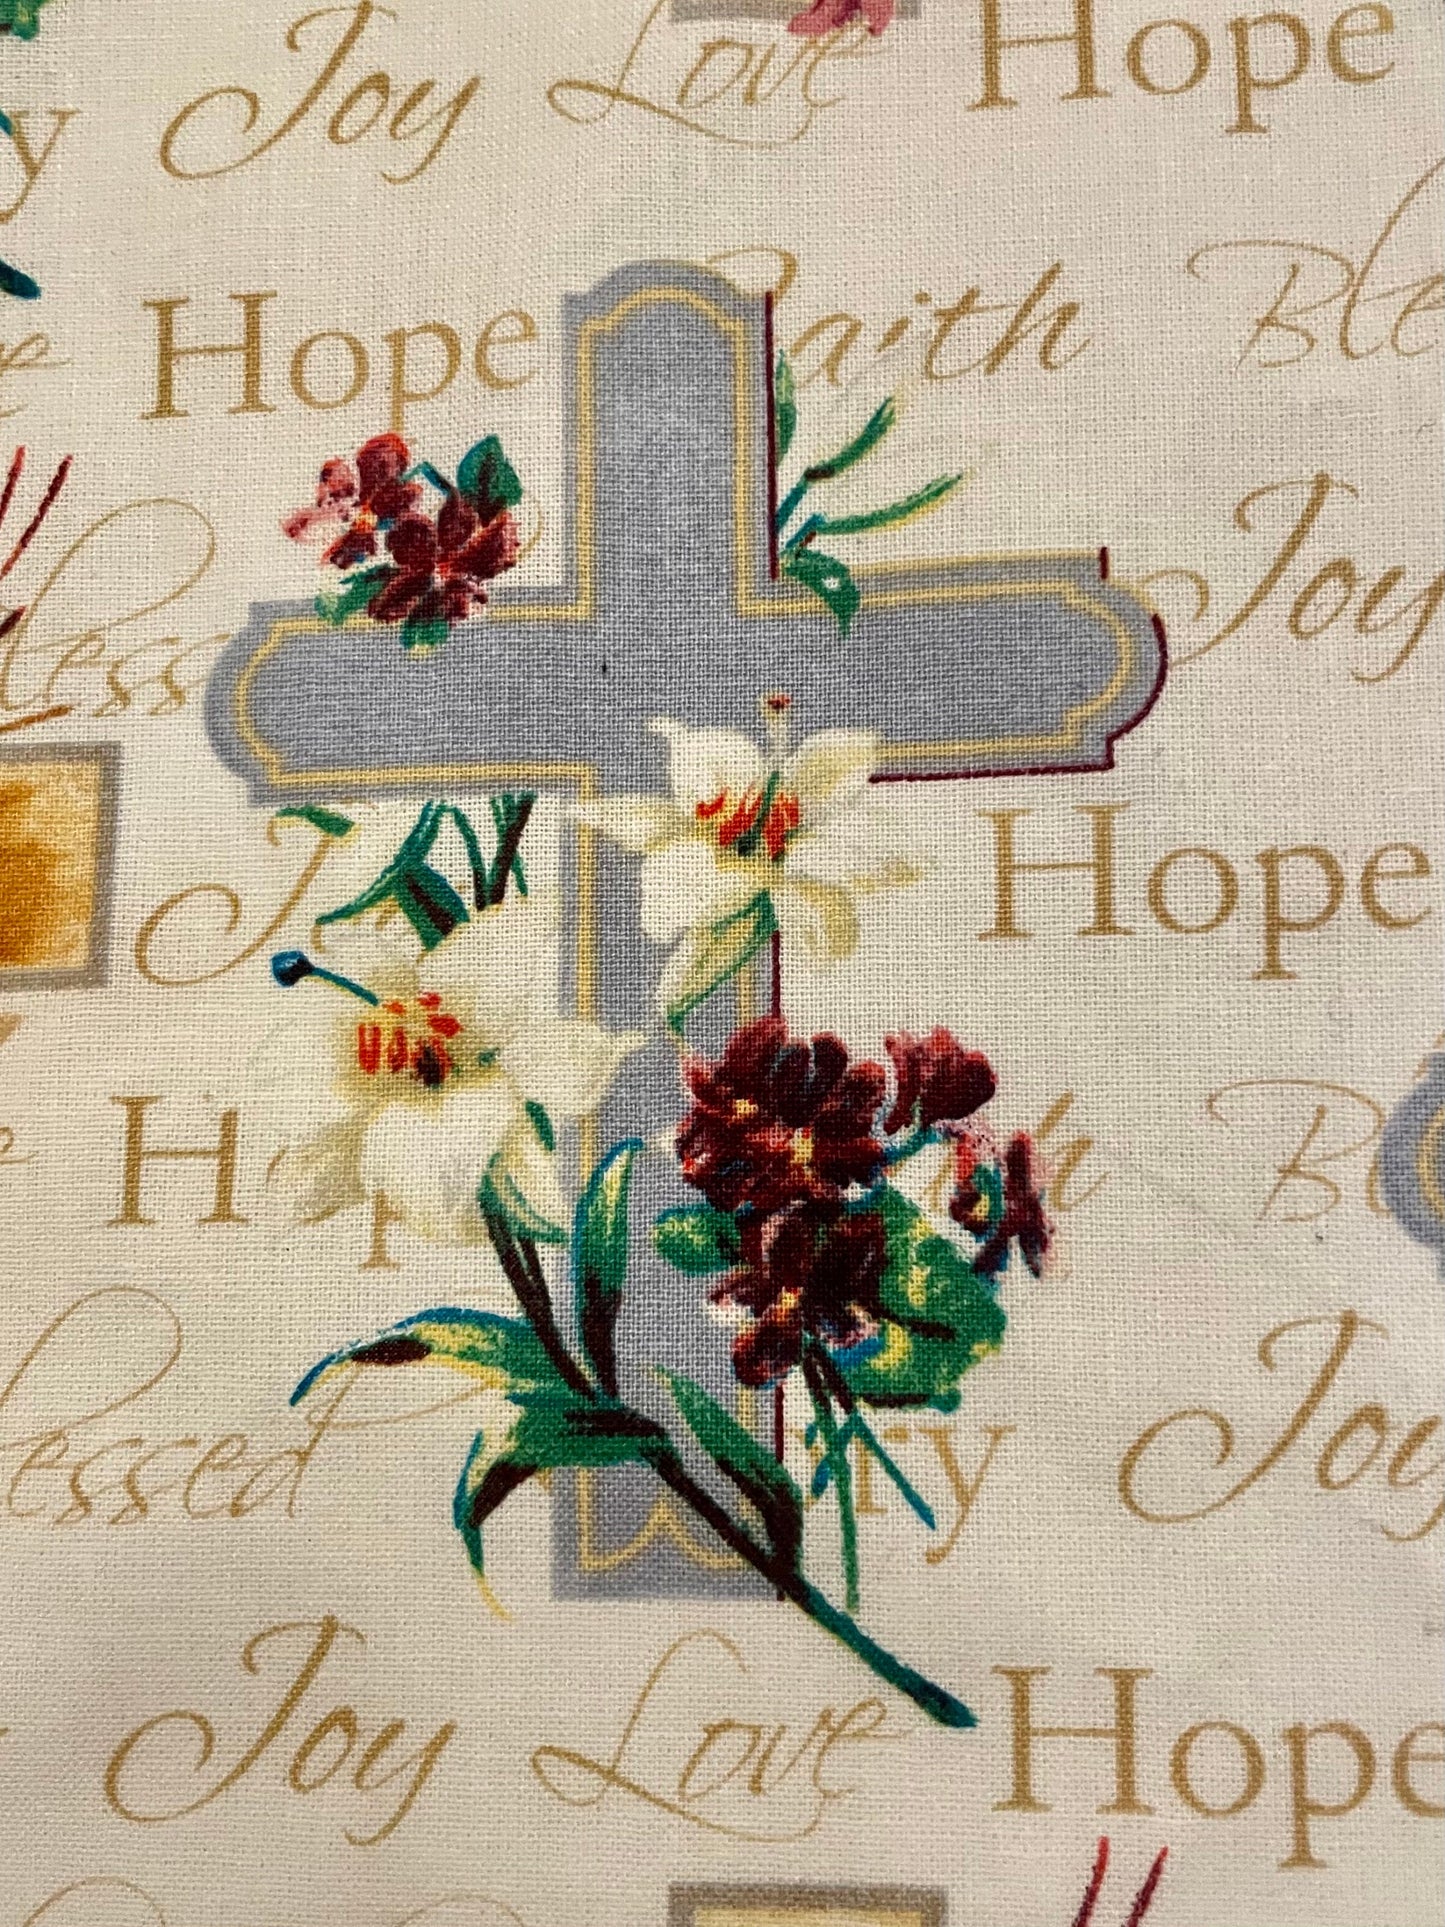 Beautiful Christian Hope Crosses and Flowers blanket